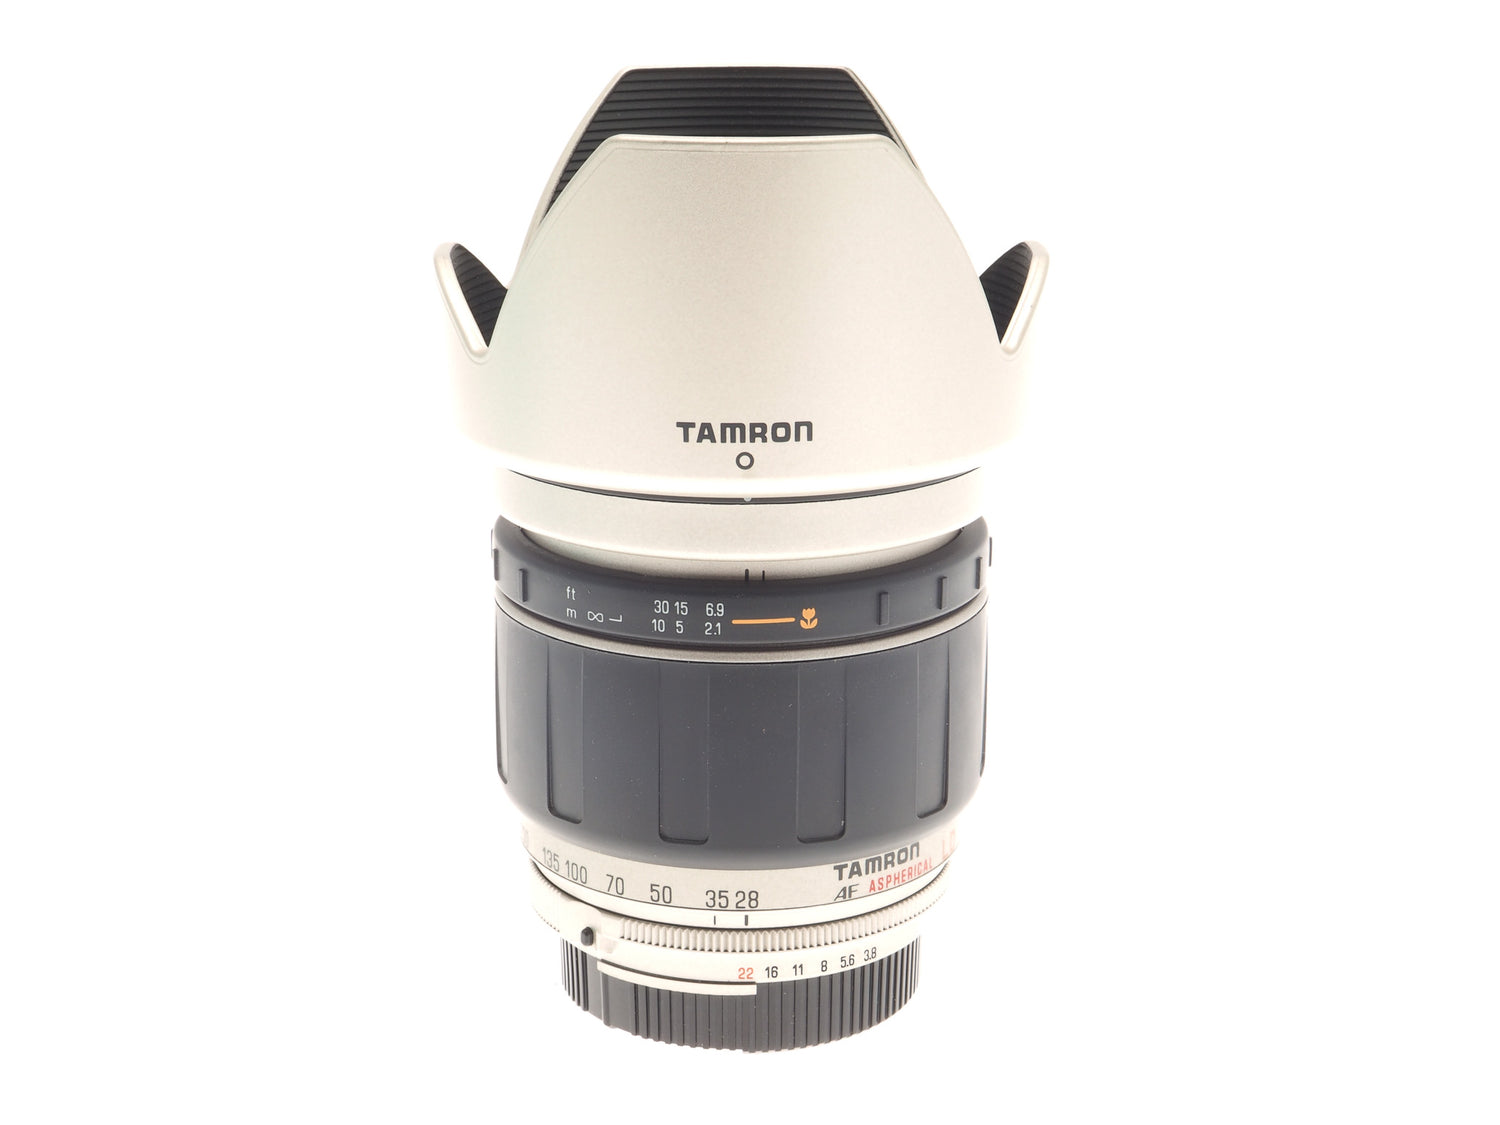 Tamron 28-200mm f3.8-5.6 LD Aspherical (IF) Super (271DN)